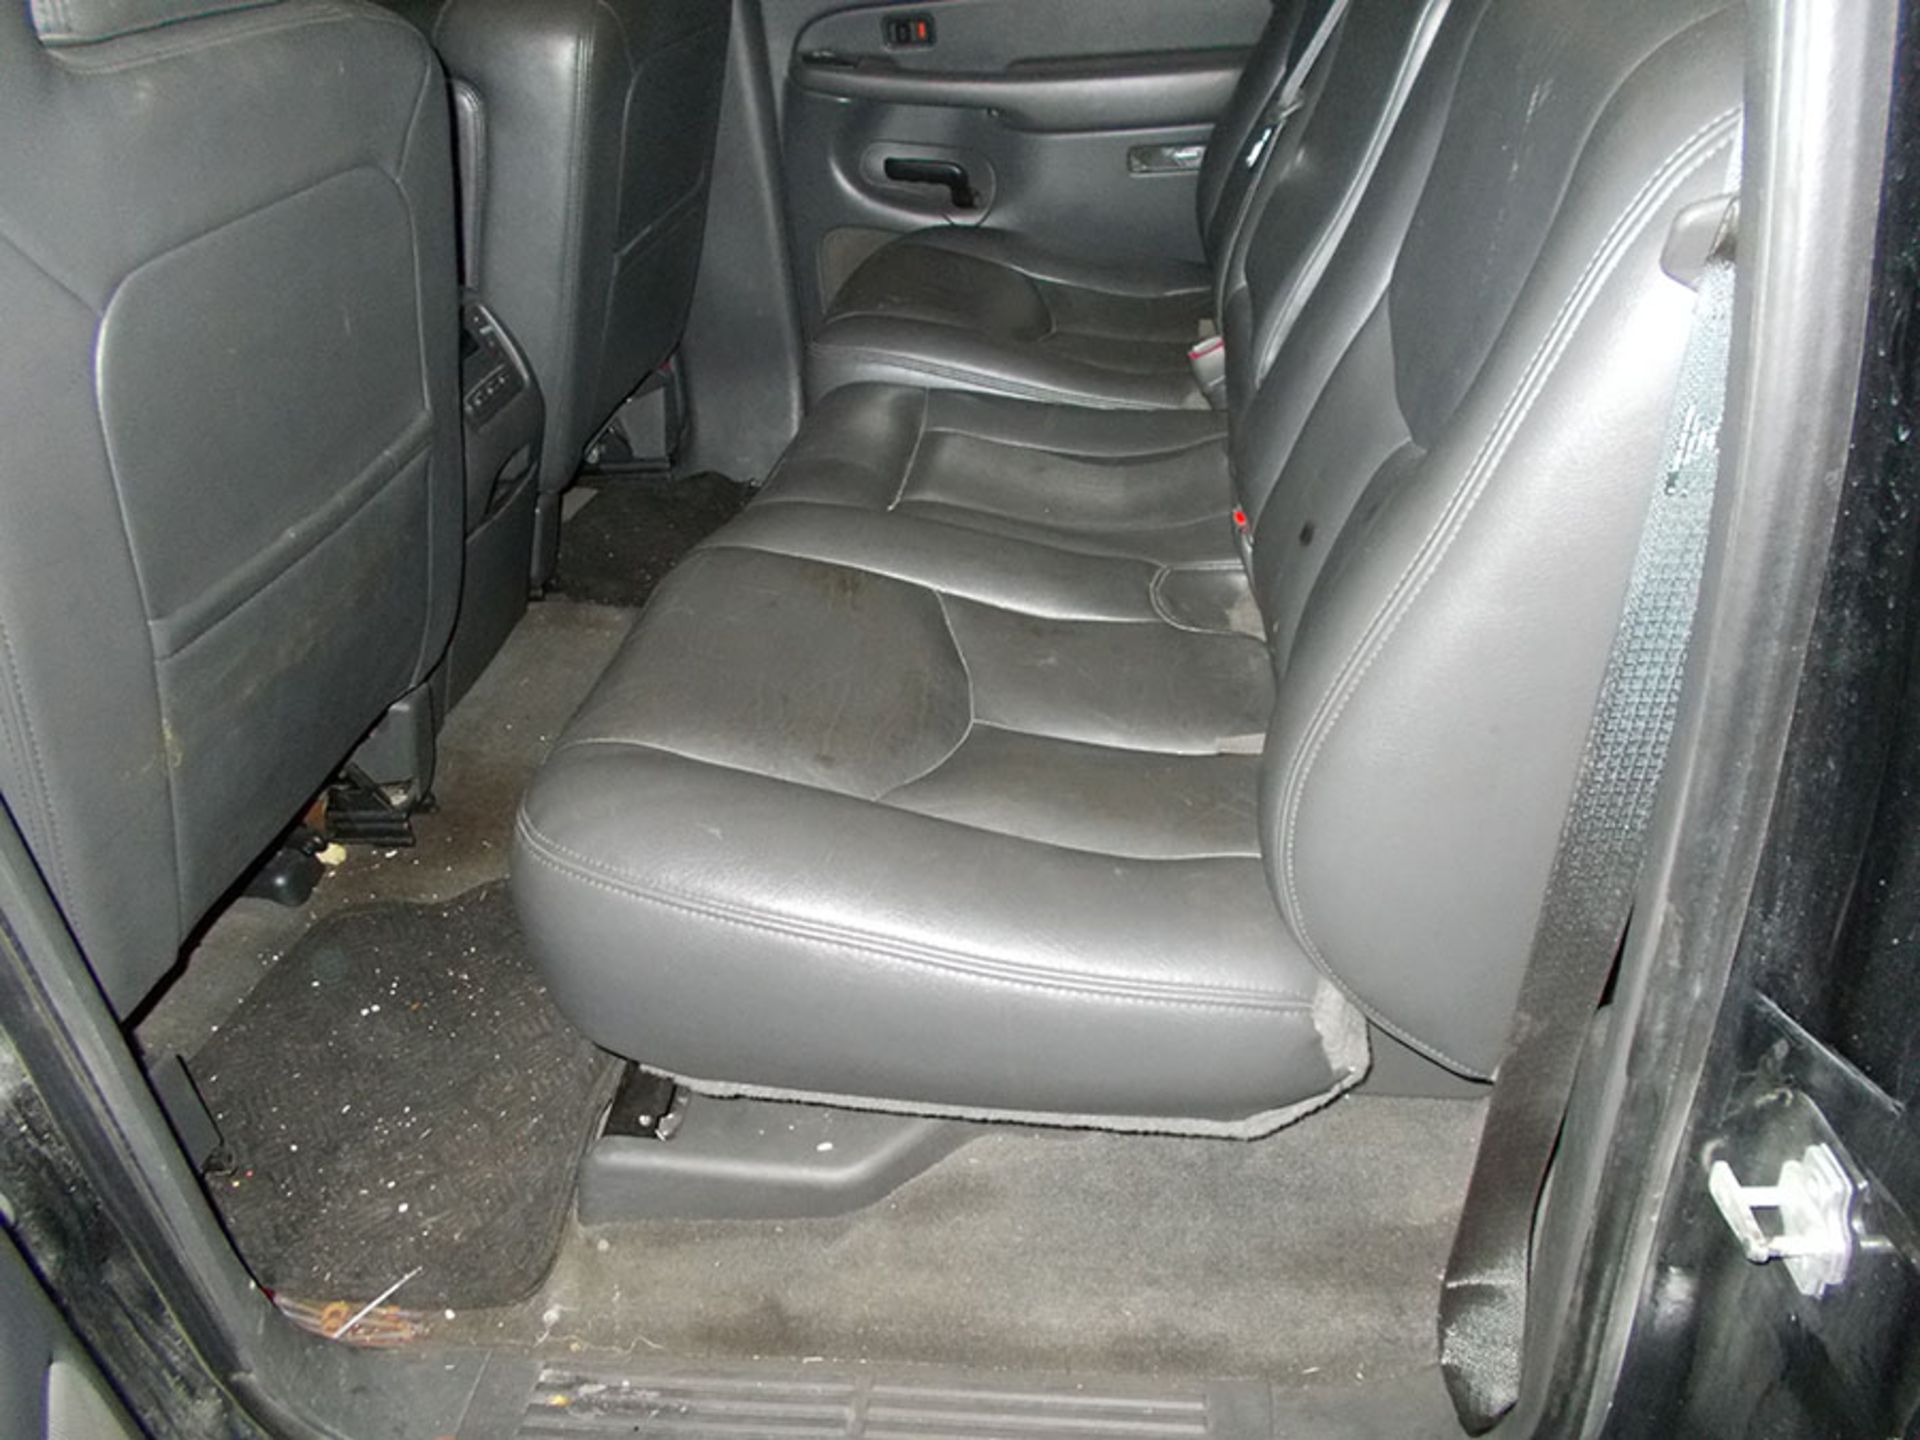 2005 GMC MODEL Z71 OFF ROAD 4-WHEEL DRIVE TRUCK; CREW CAB, SLT, 195,679 MILES, 6' BED, VIN - Image 6 of 6